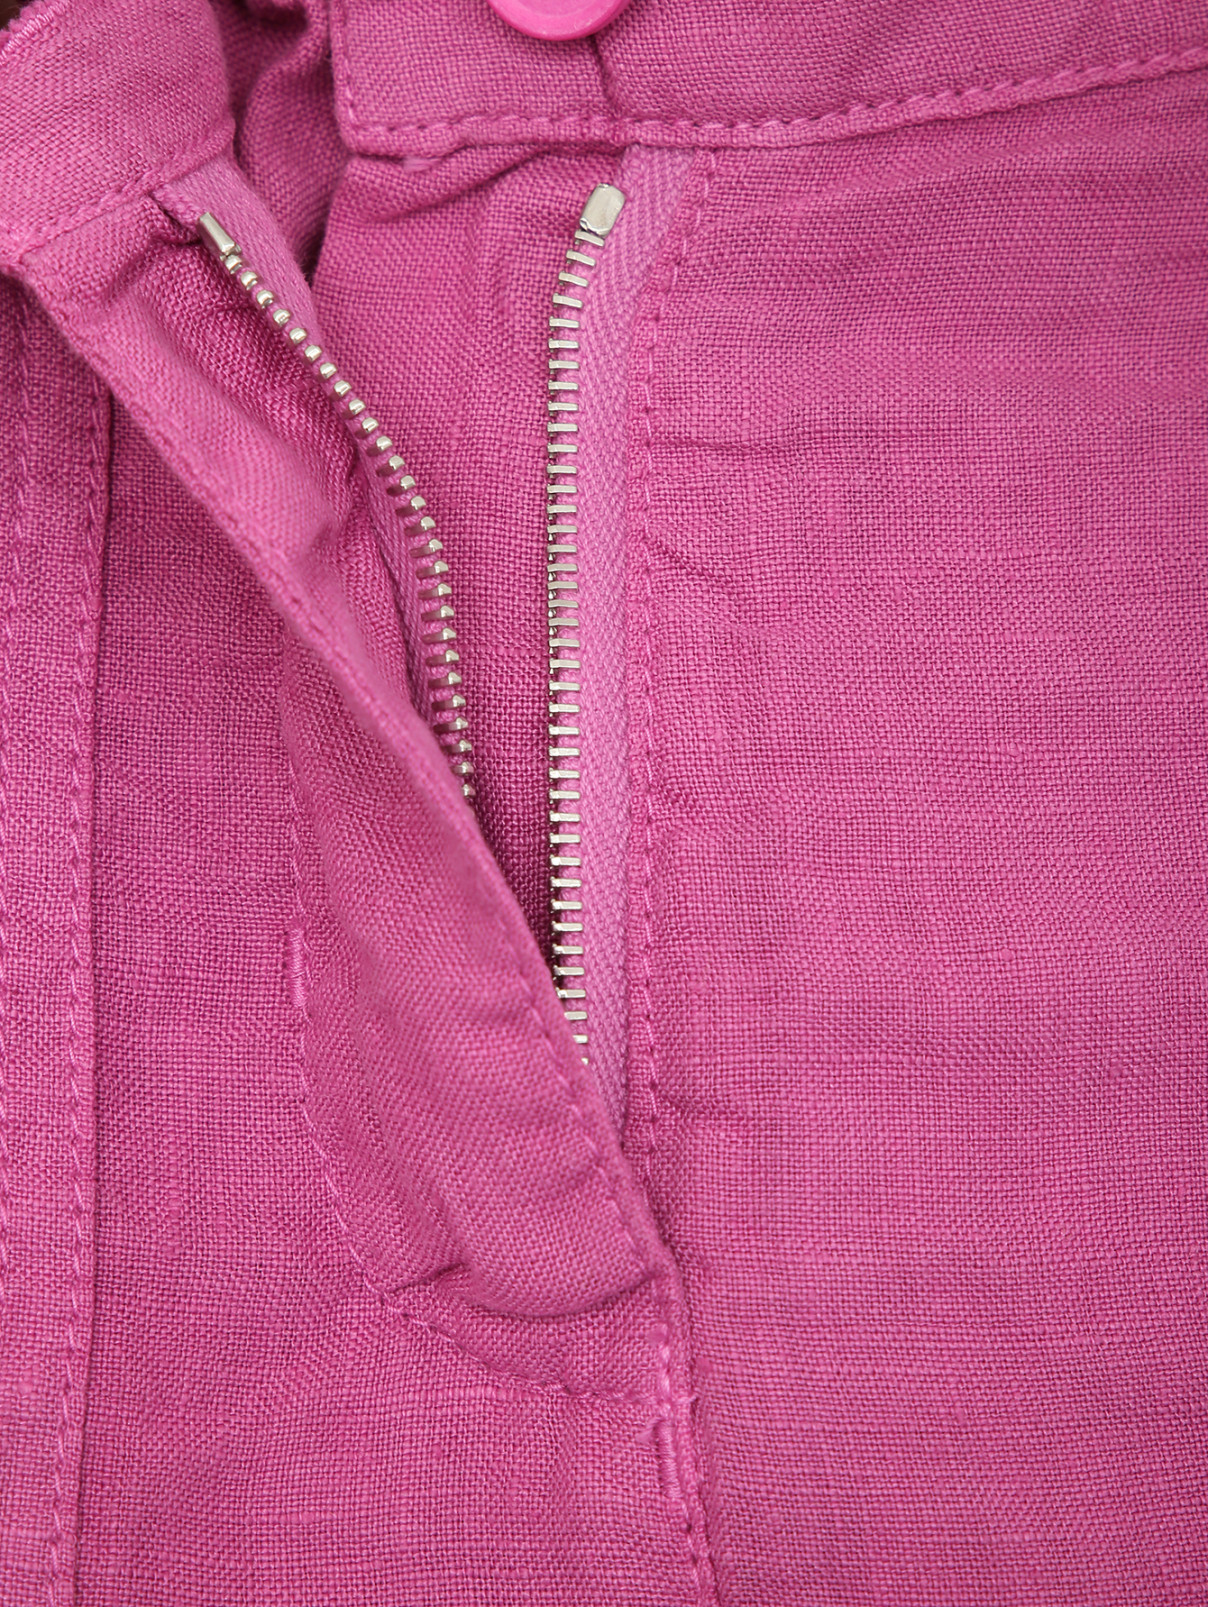 Брюки изо льна на резинке Il Gufo  –  Деталь  – Цвет:  Розовый